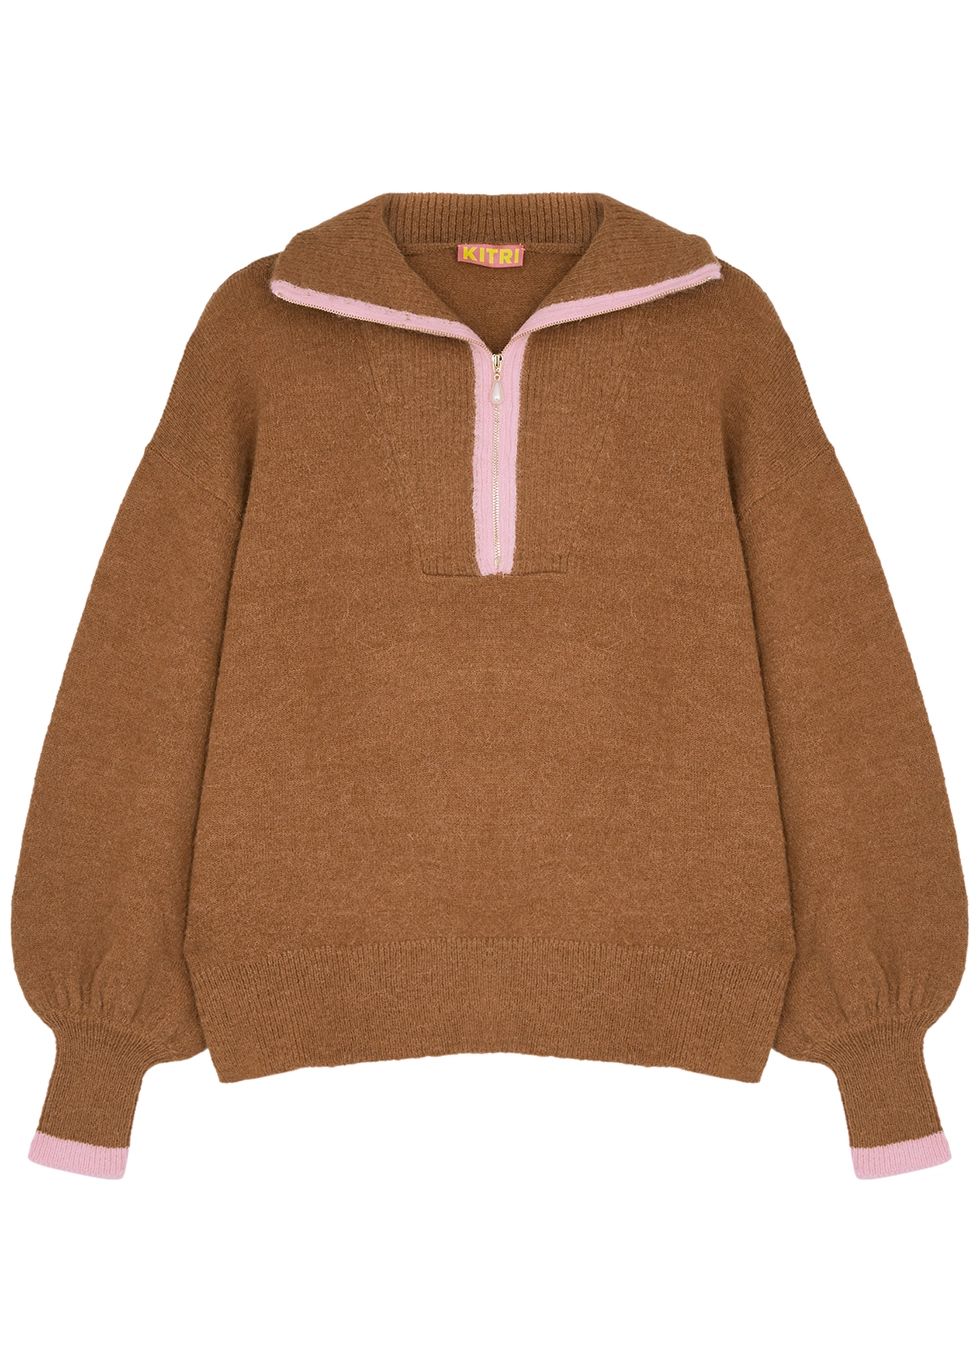 Lorna brown half-zip knitted jumper | Harvey Nichols 